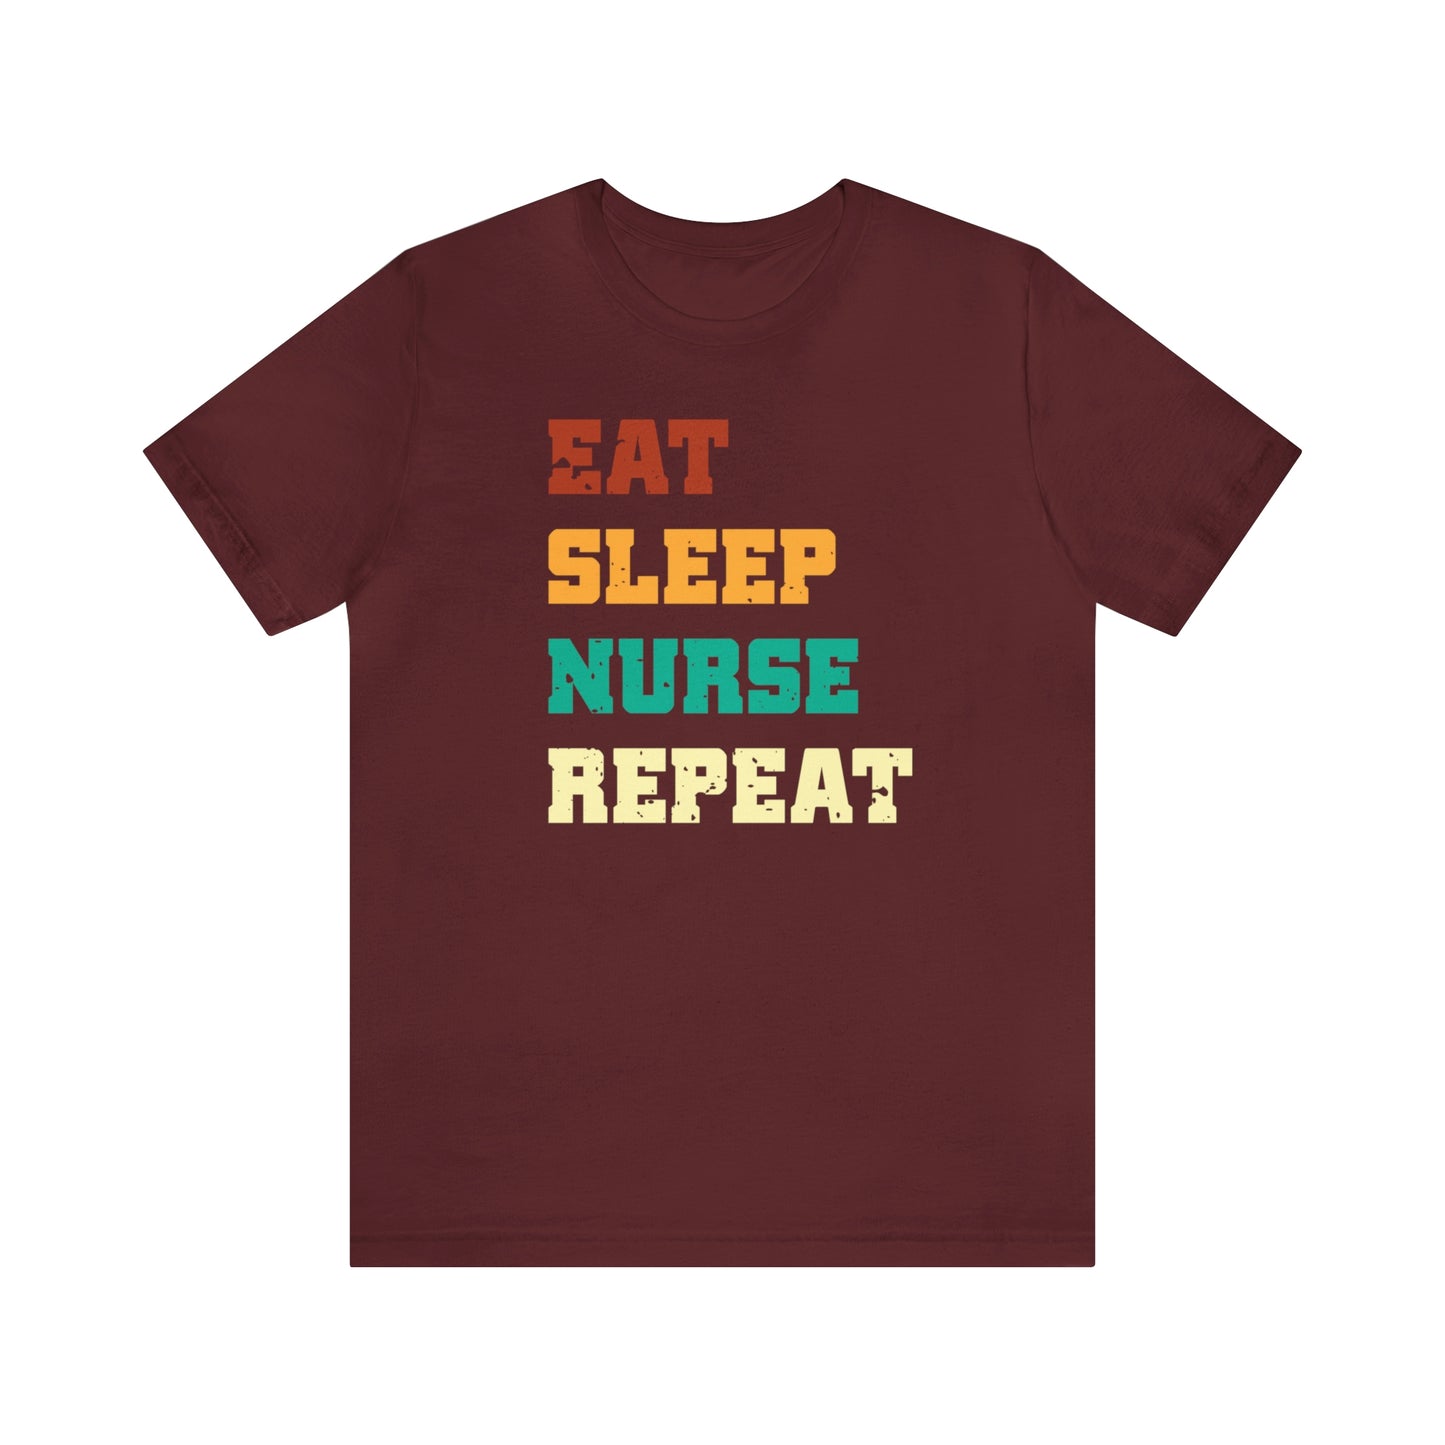 Eat Sleep Nurse Repeat, Unisex T-shirt, Mothers Day, Fathers Day, Nurse, Nursing, Healthcare Gift